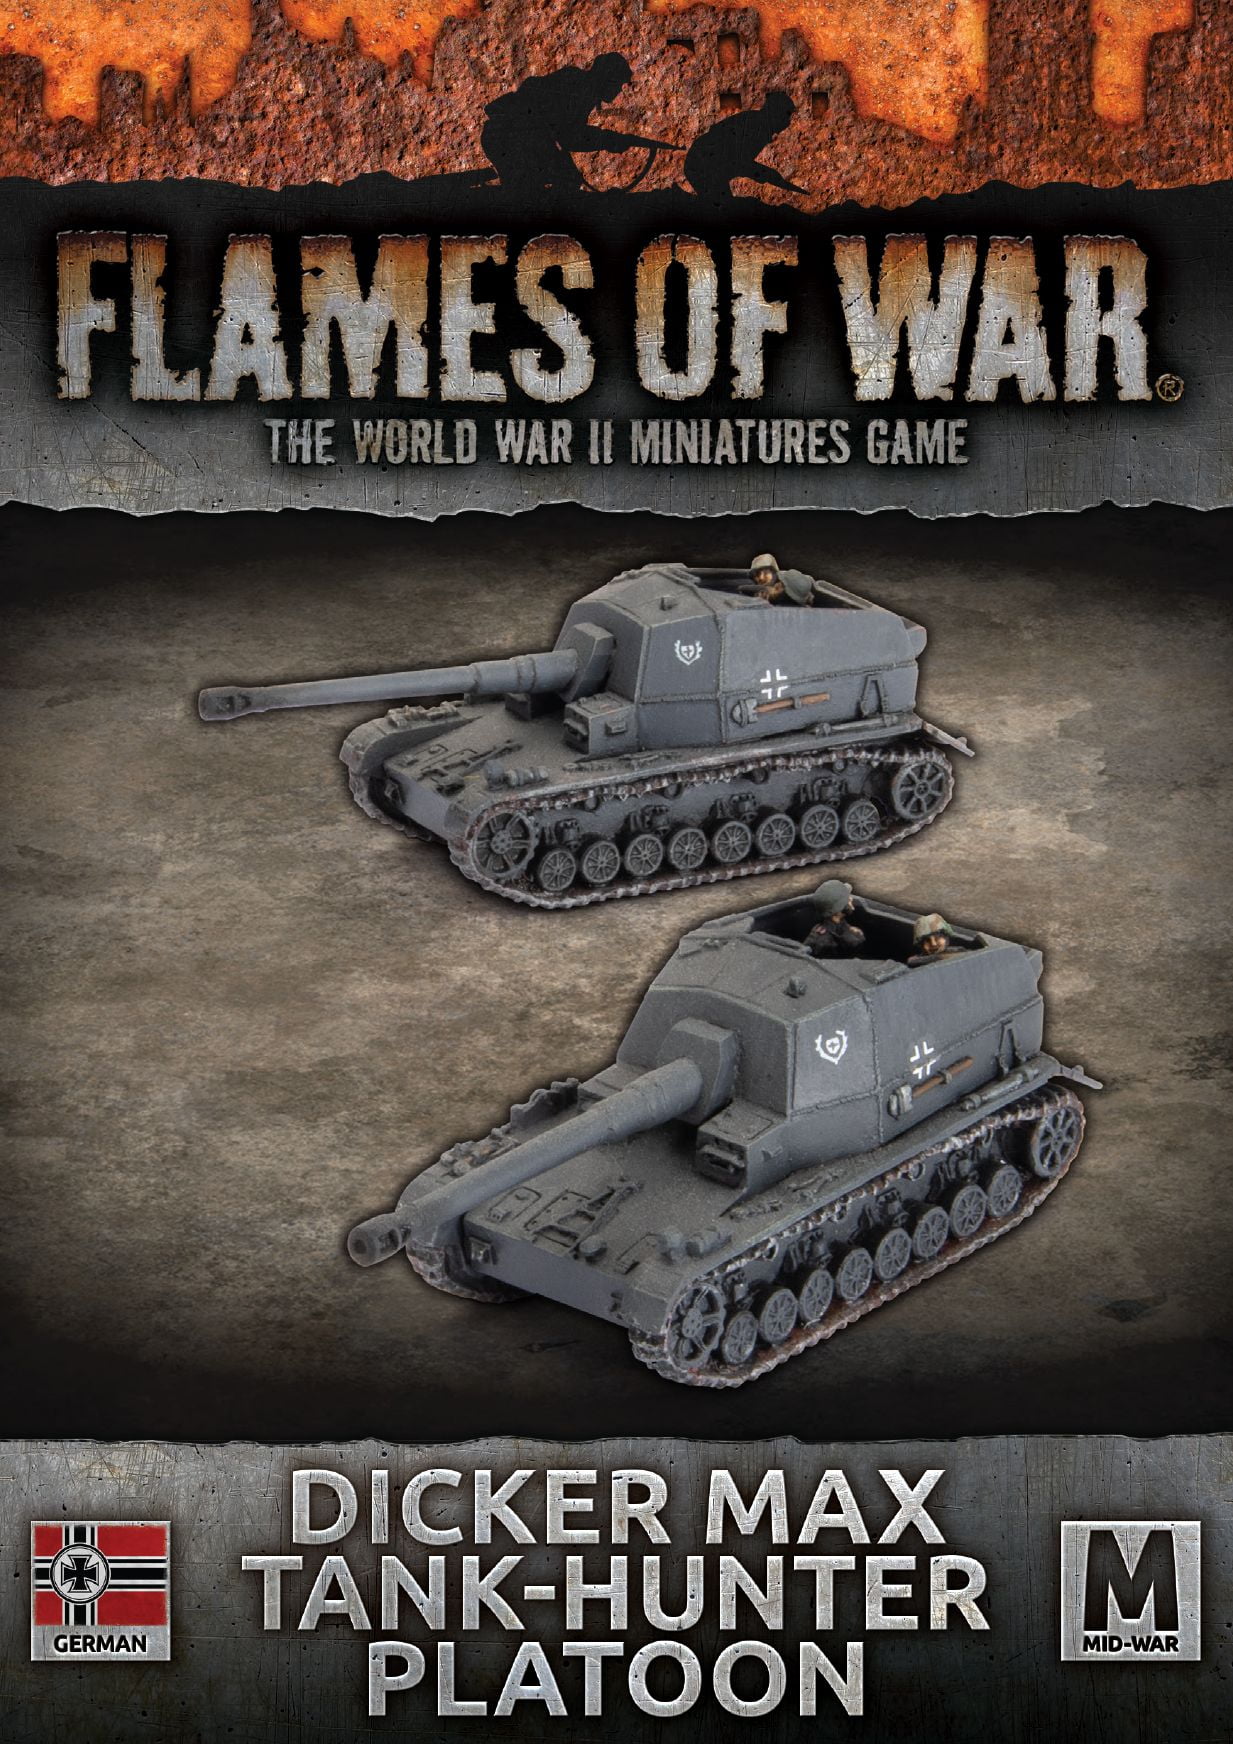 Dicker Max Tank-Hunter Platoon